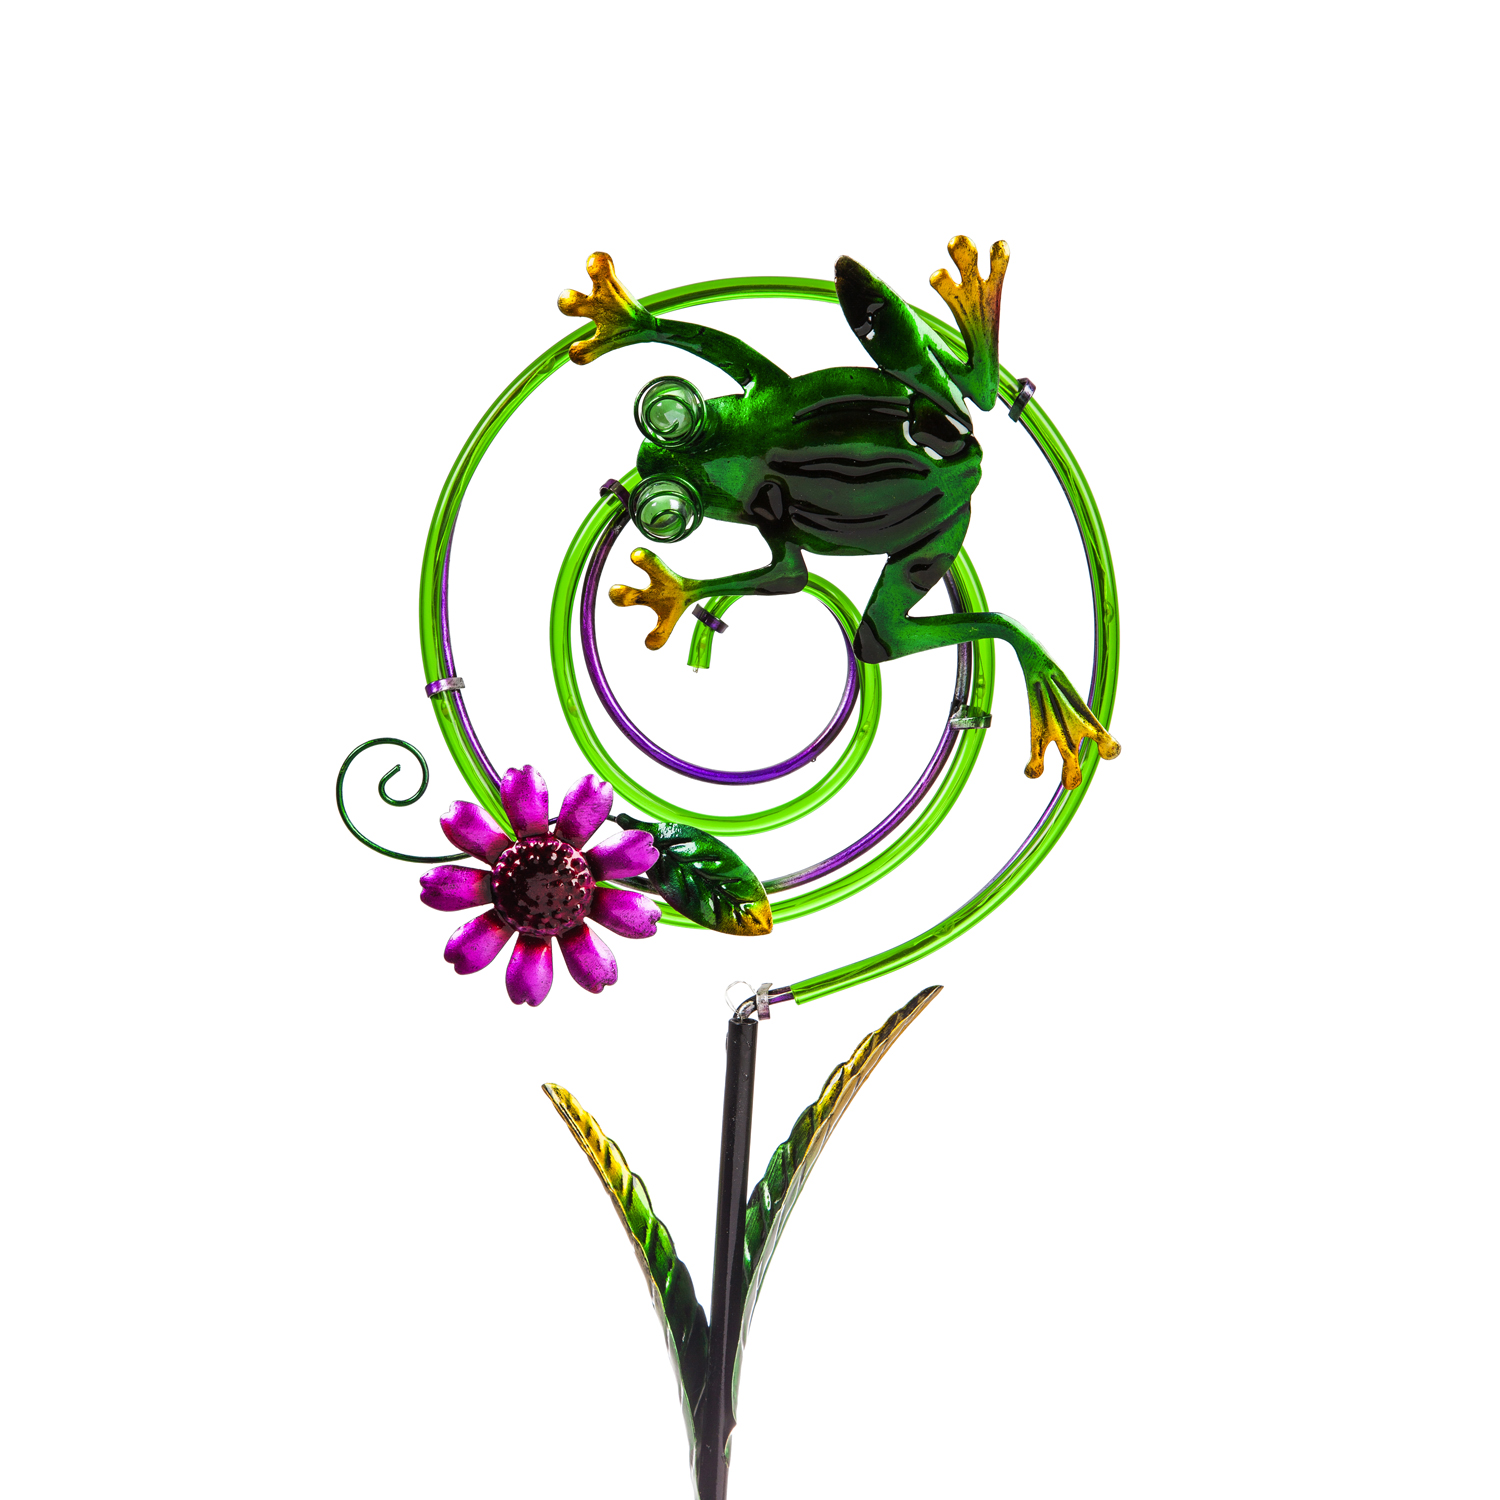 Evergreen 35.75"H Chasing Light Solar Swirl Garden Stake, 2 ASST., Frog/Ladybug, 1.8''x 8.5'' x 35.8'' inches - image 3 of 3